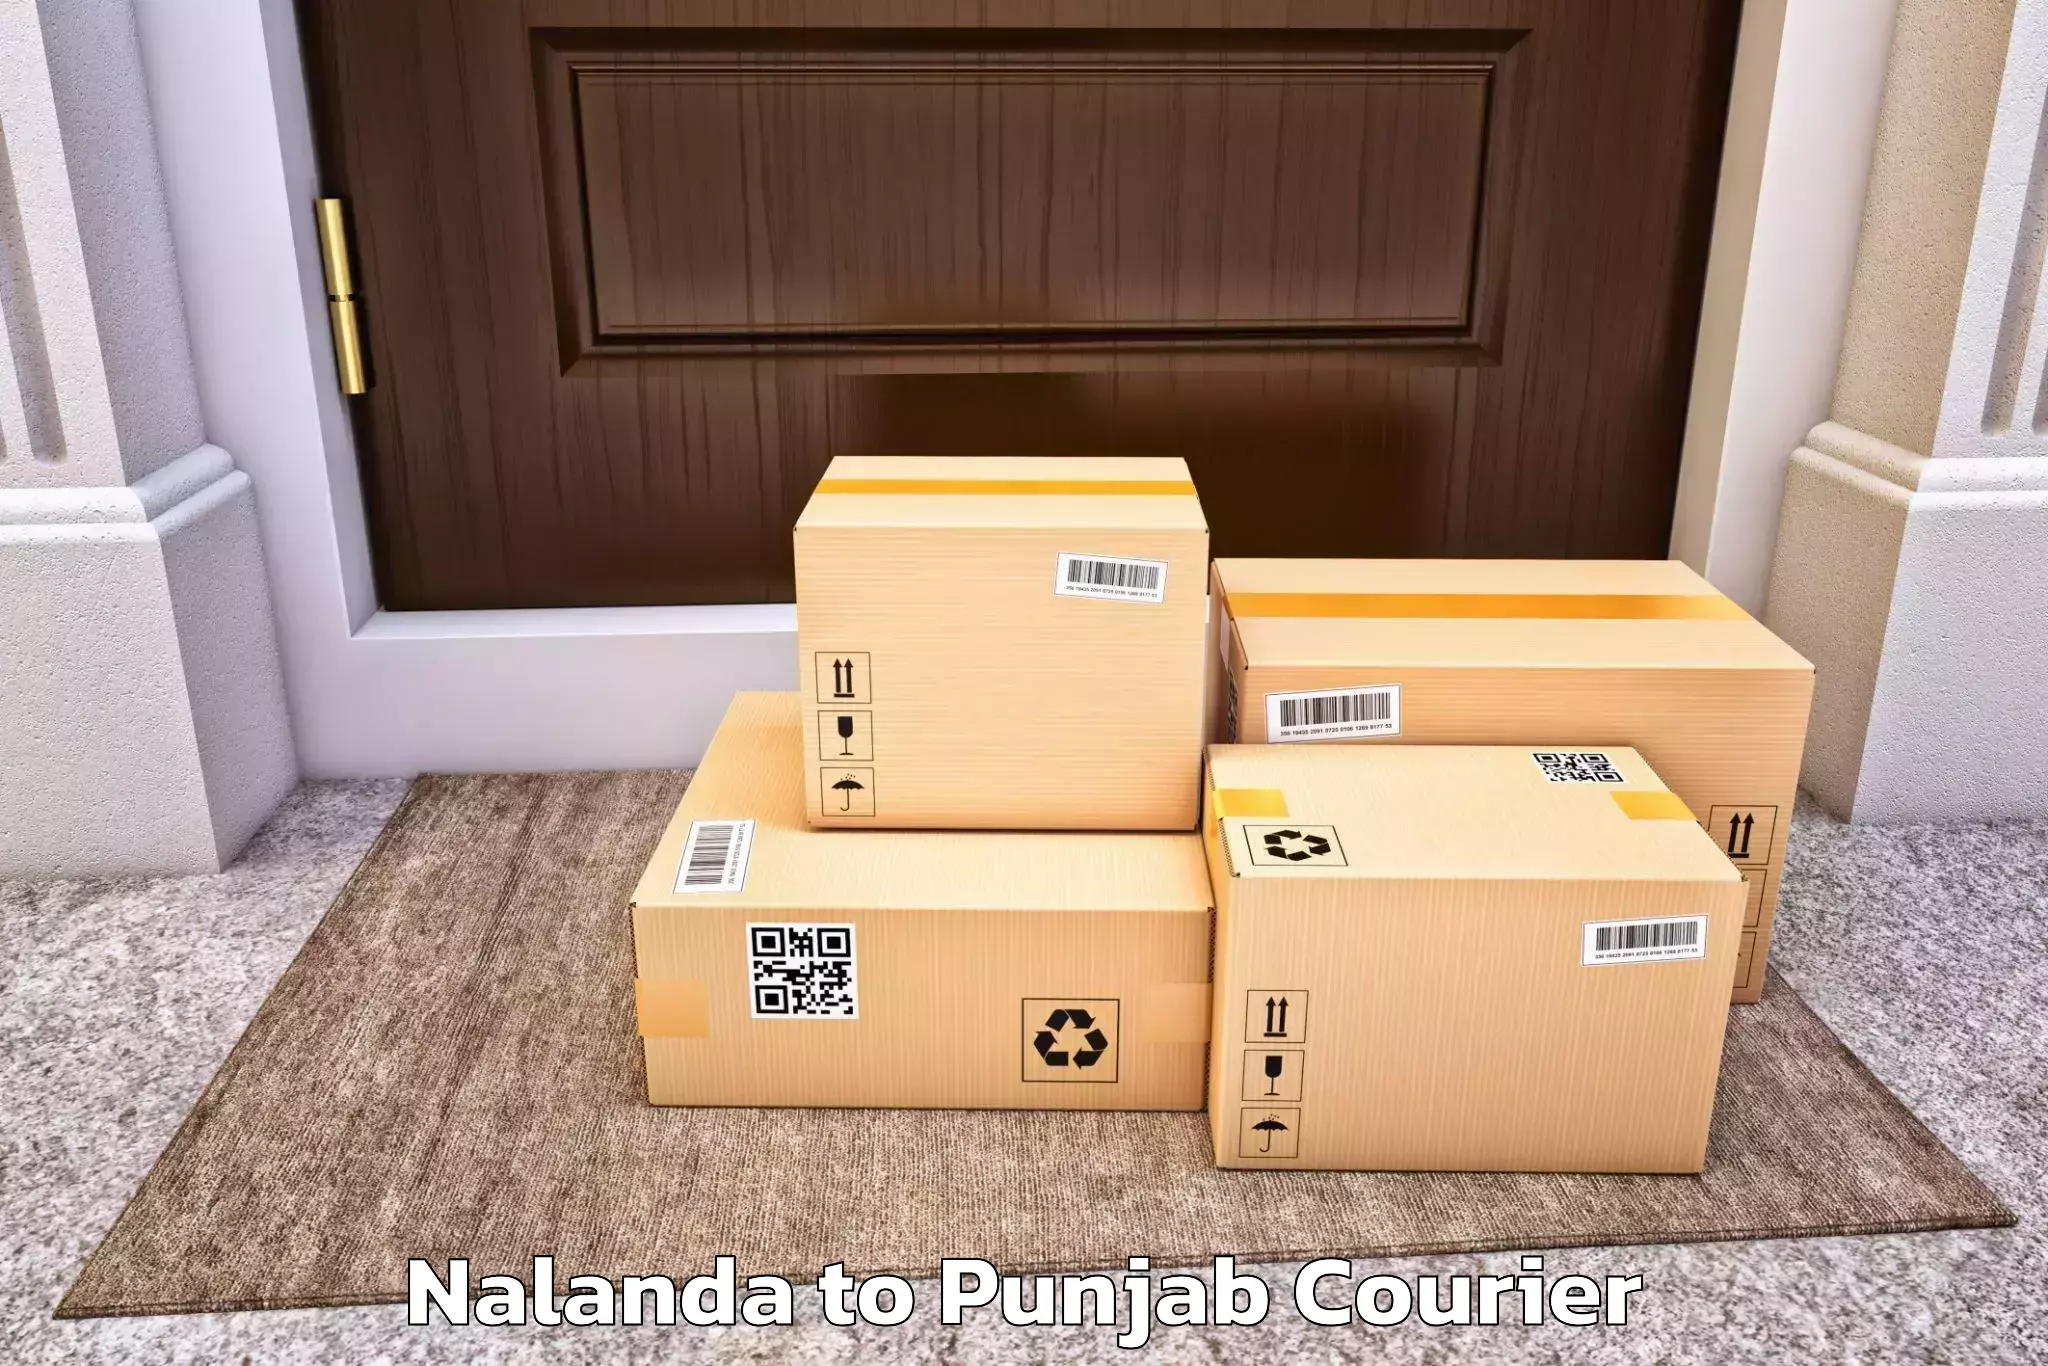 Professional moving company Nalanda to Punjab